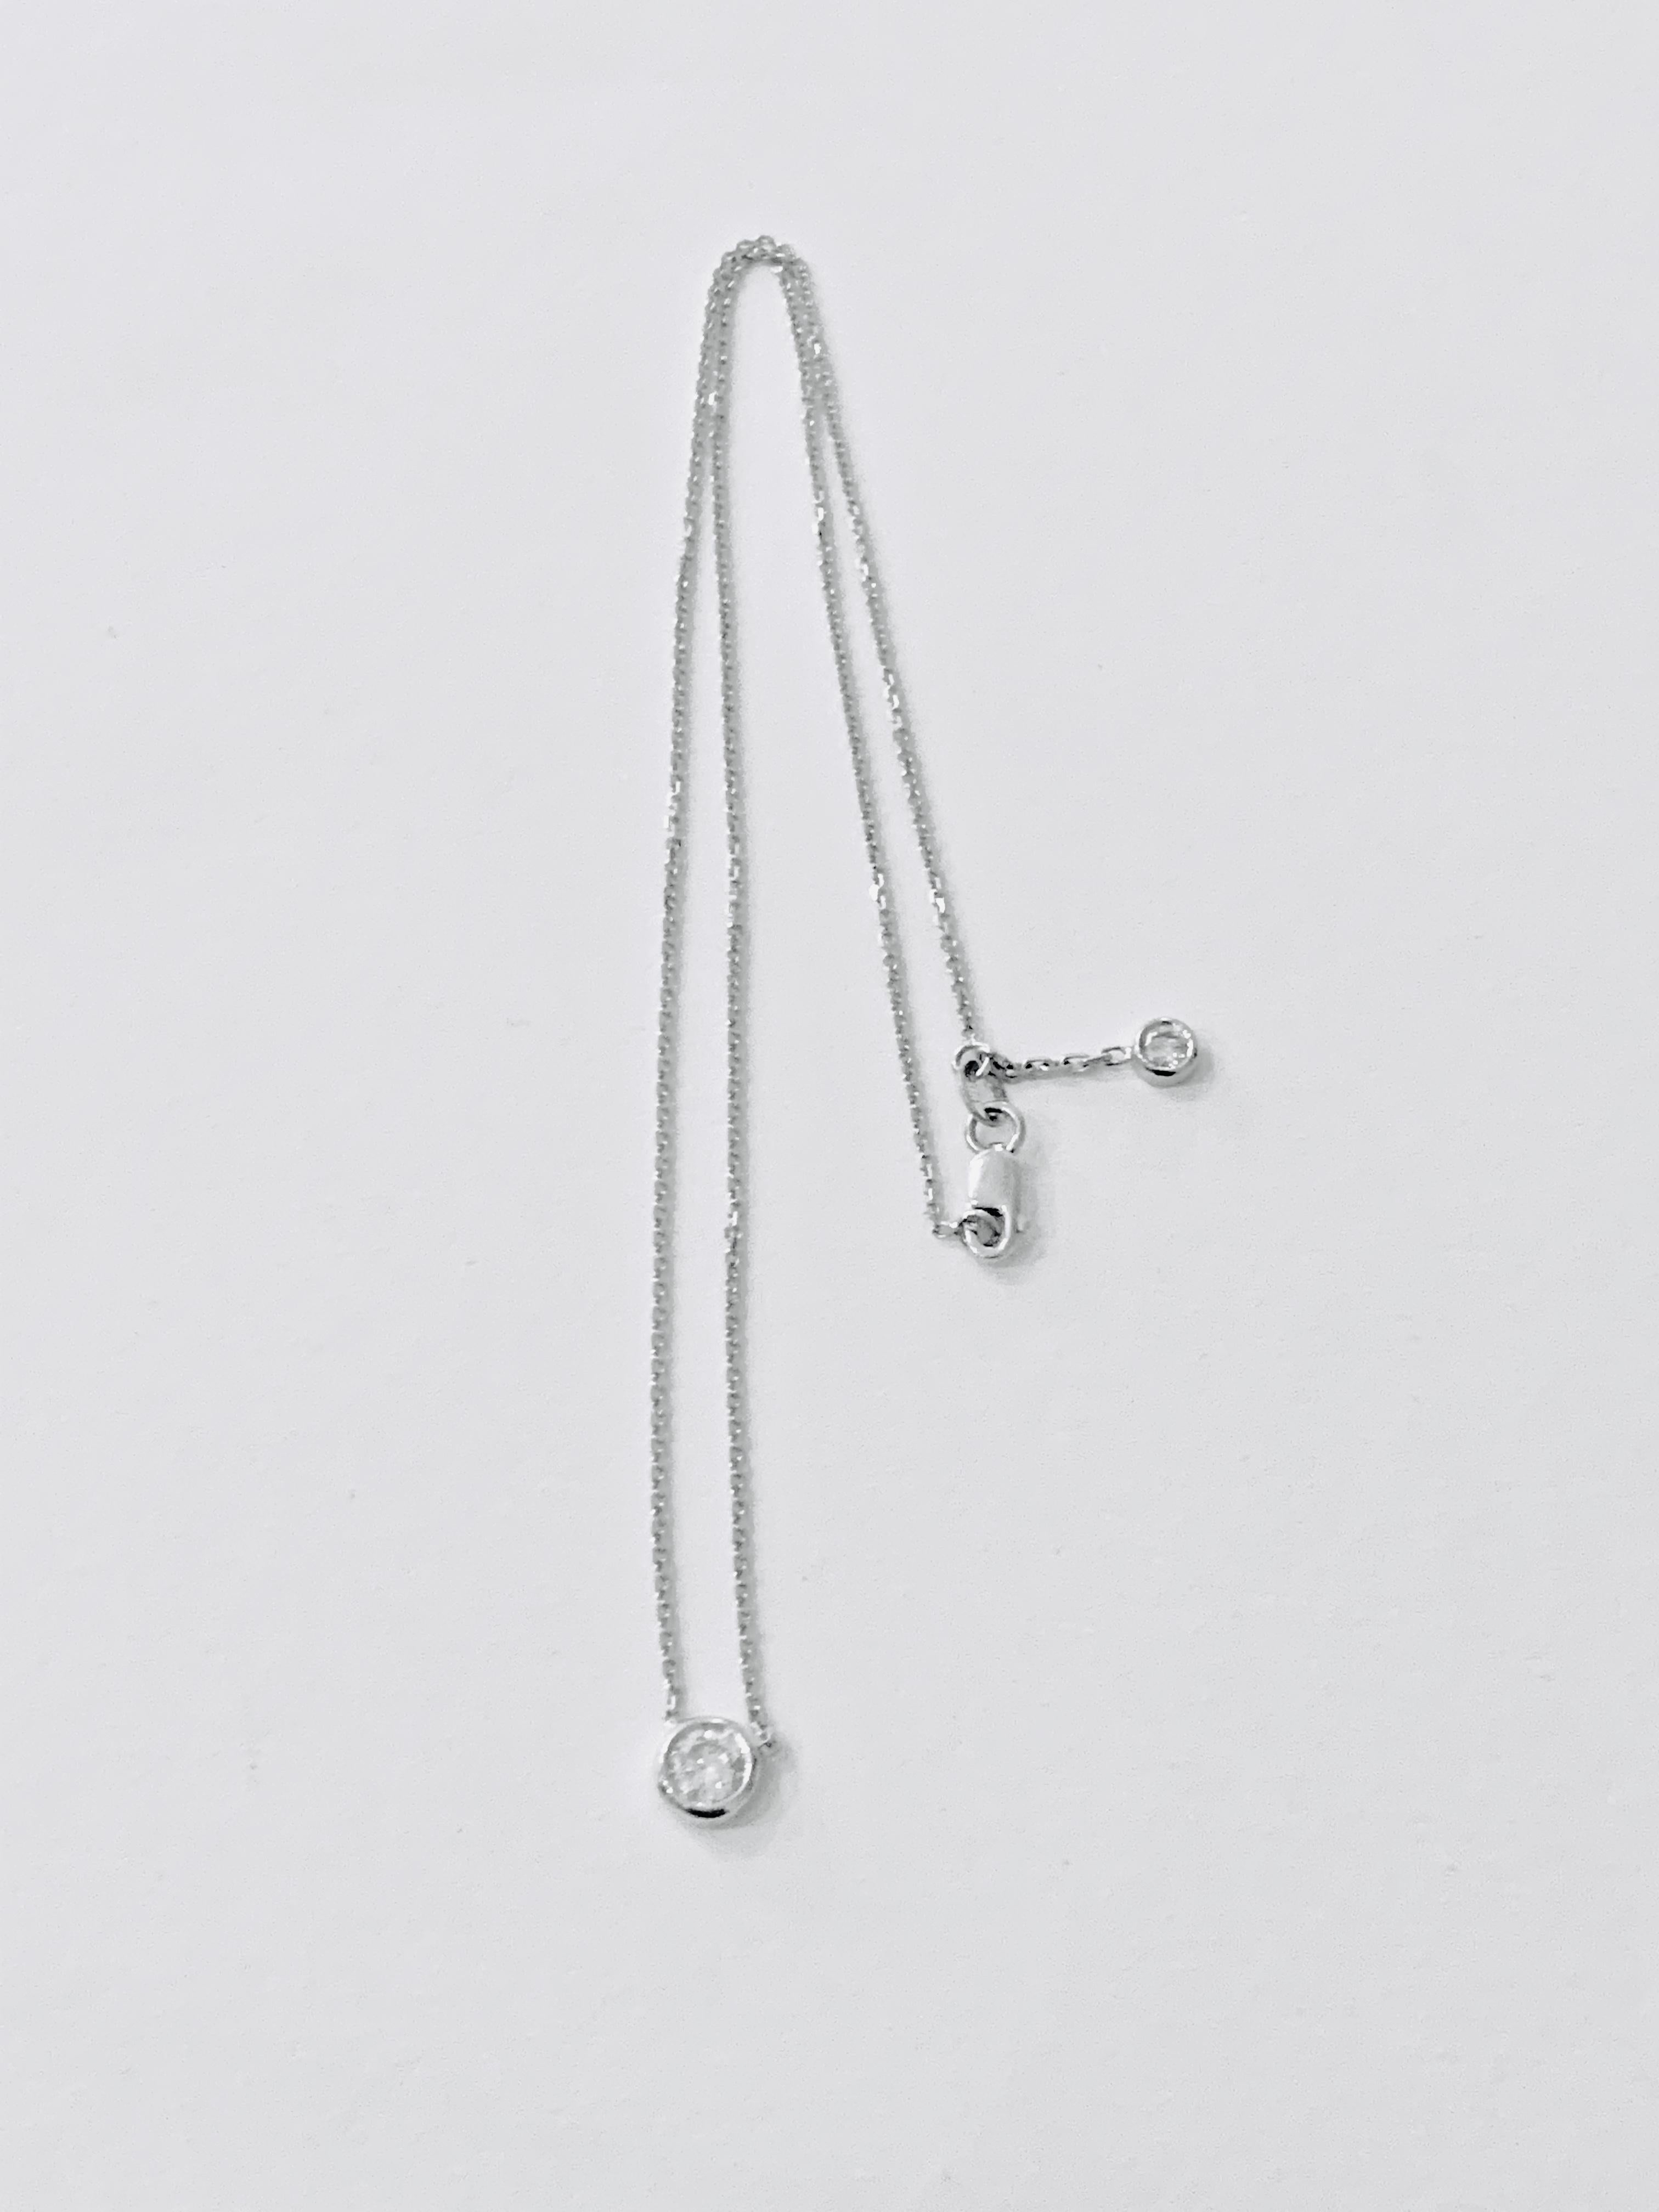 .41 Carat Brilliant Cut Diamond Bezel Set Necklace in 18 Carat White Gold For Sale 2